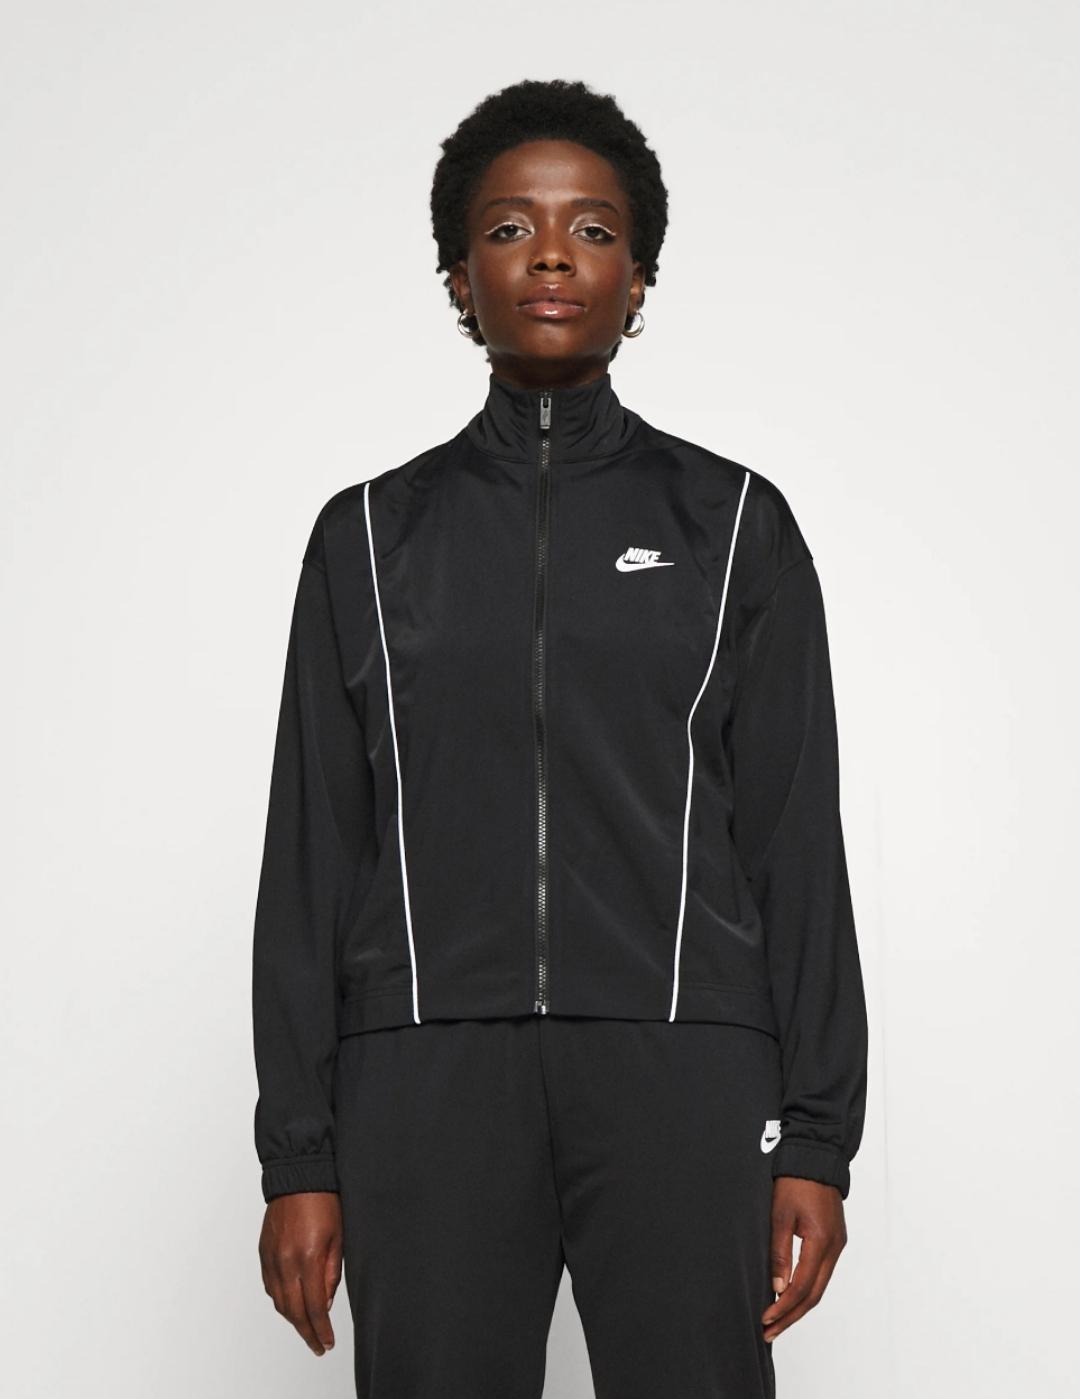 yo mismo Samuel Arriesgado Chándal Nike Sportswear Essentials para Mujer Negro/Blan